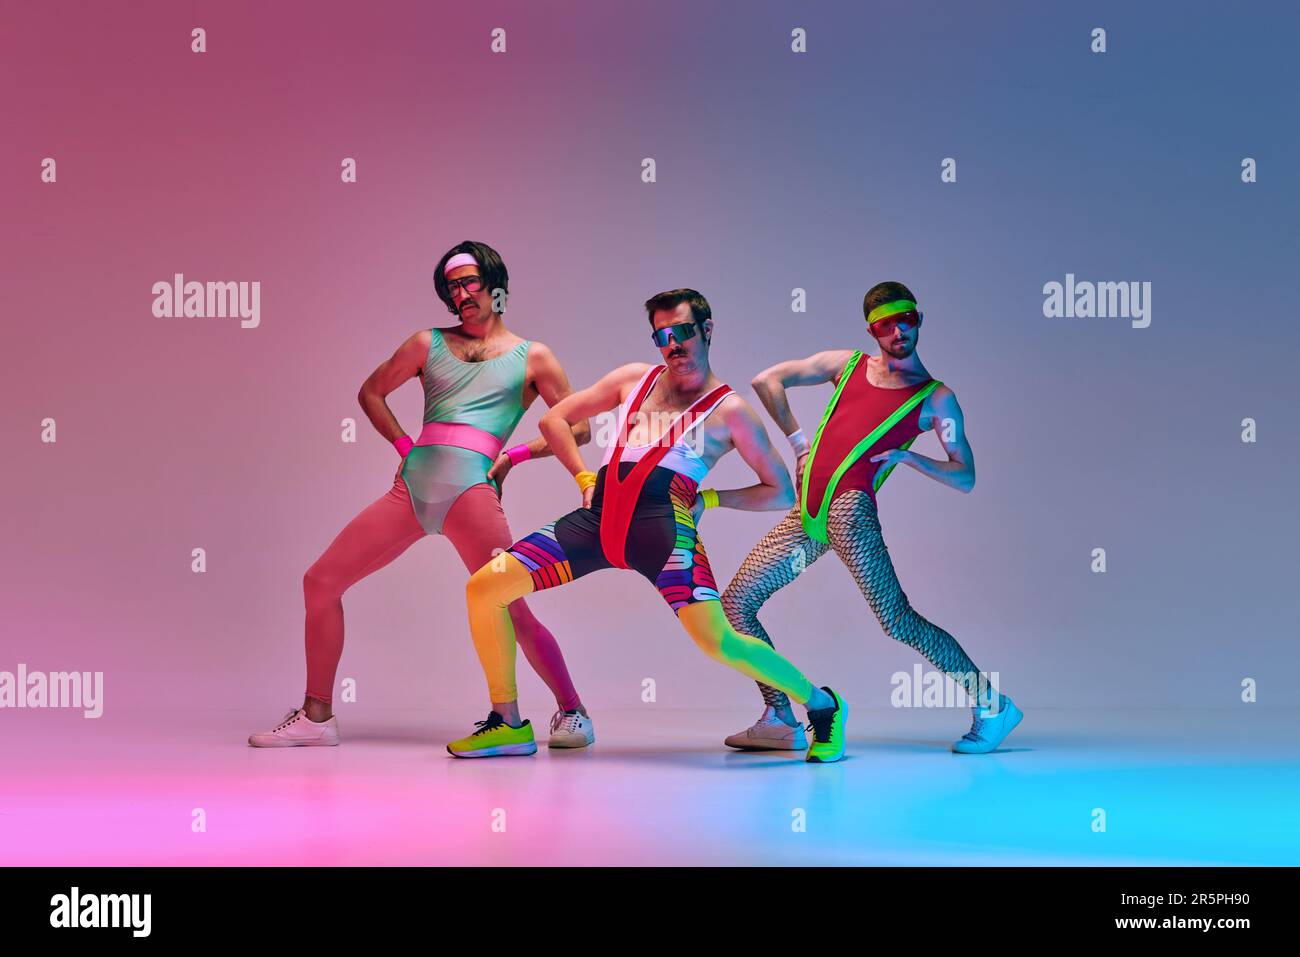 Funny men in vintage, colorful sportswear posing, doing aerobics